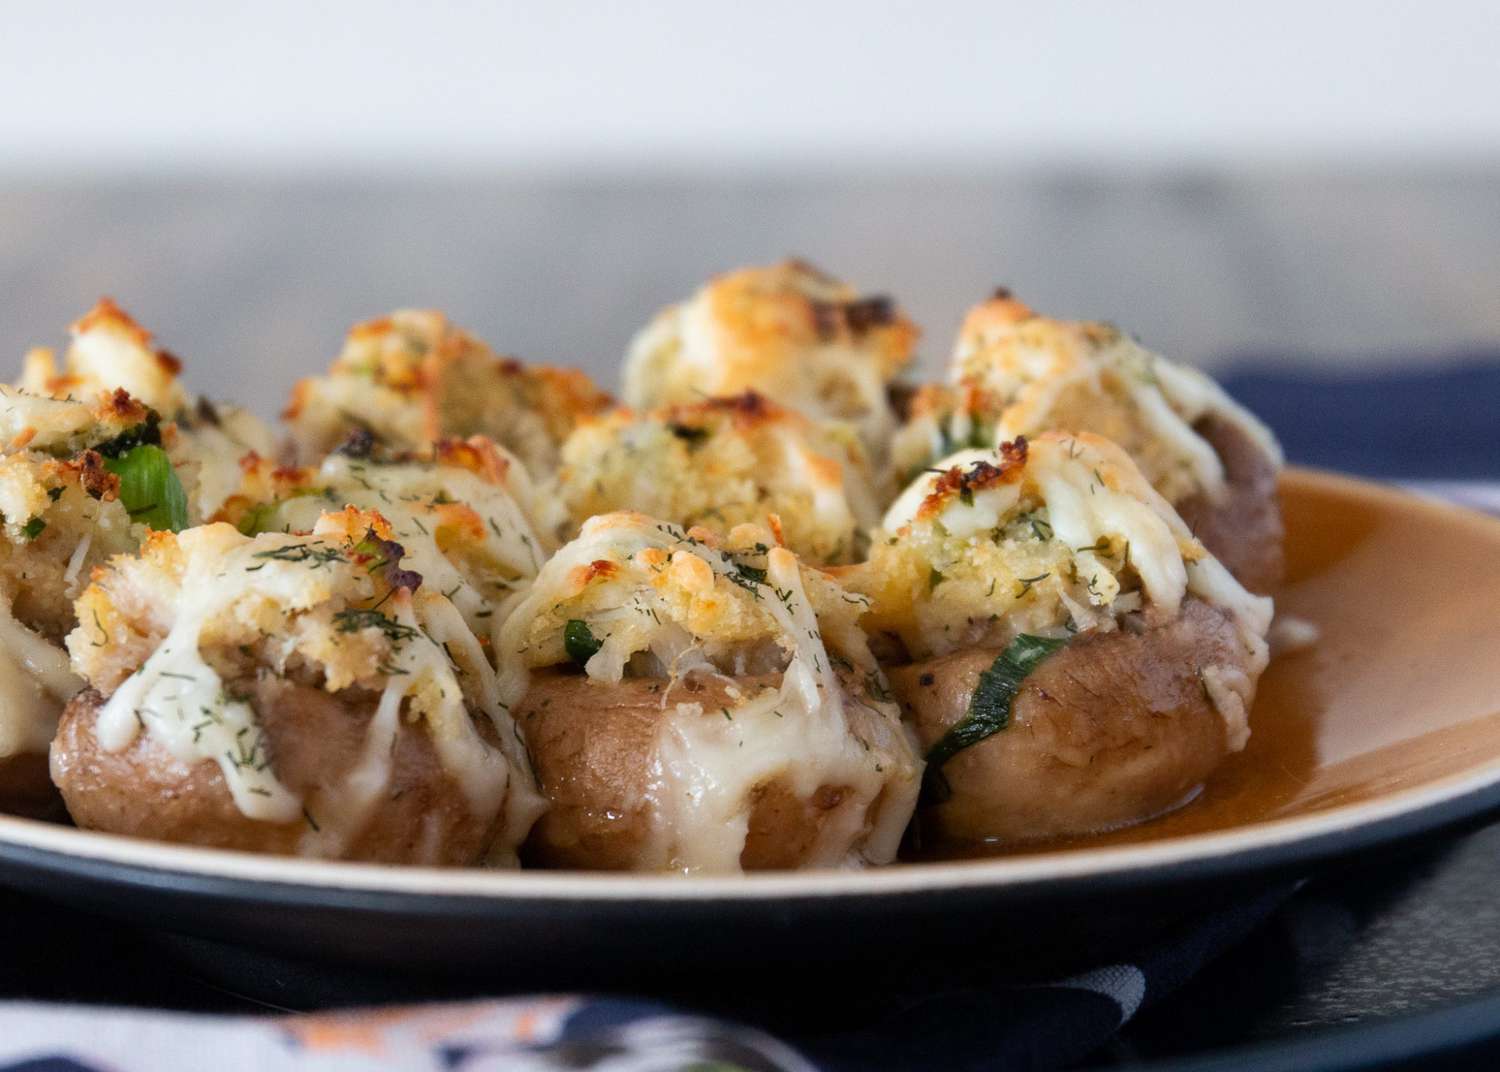 Perfect Crab-Stuffed Mushrooms